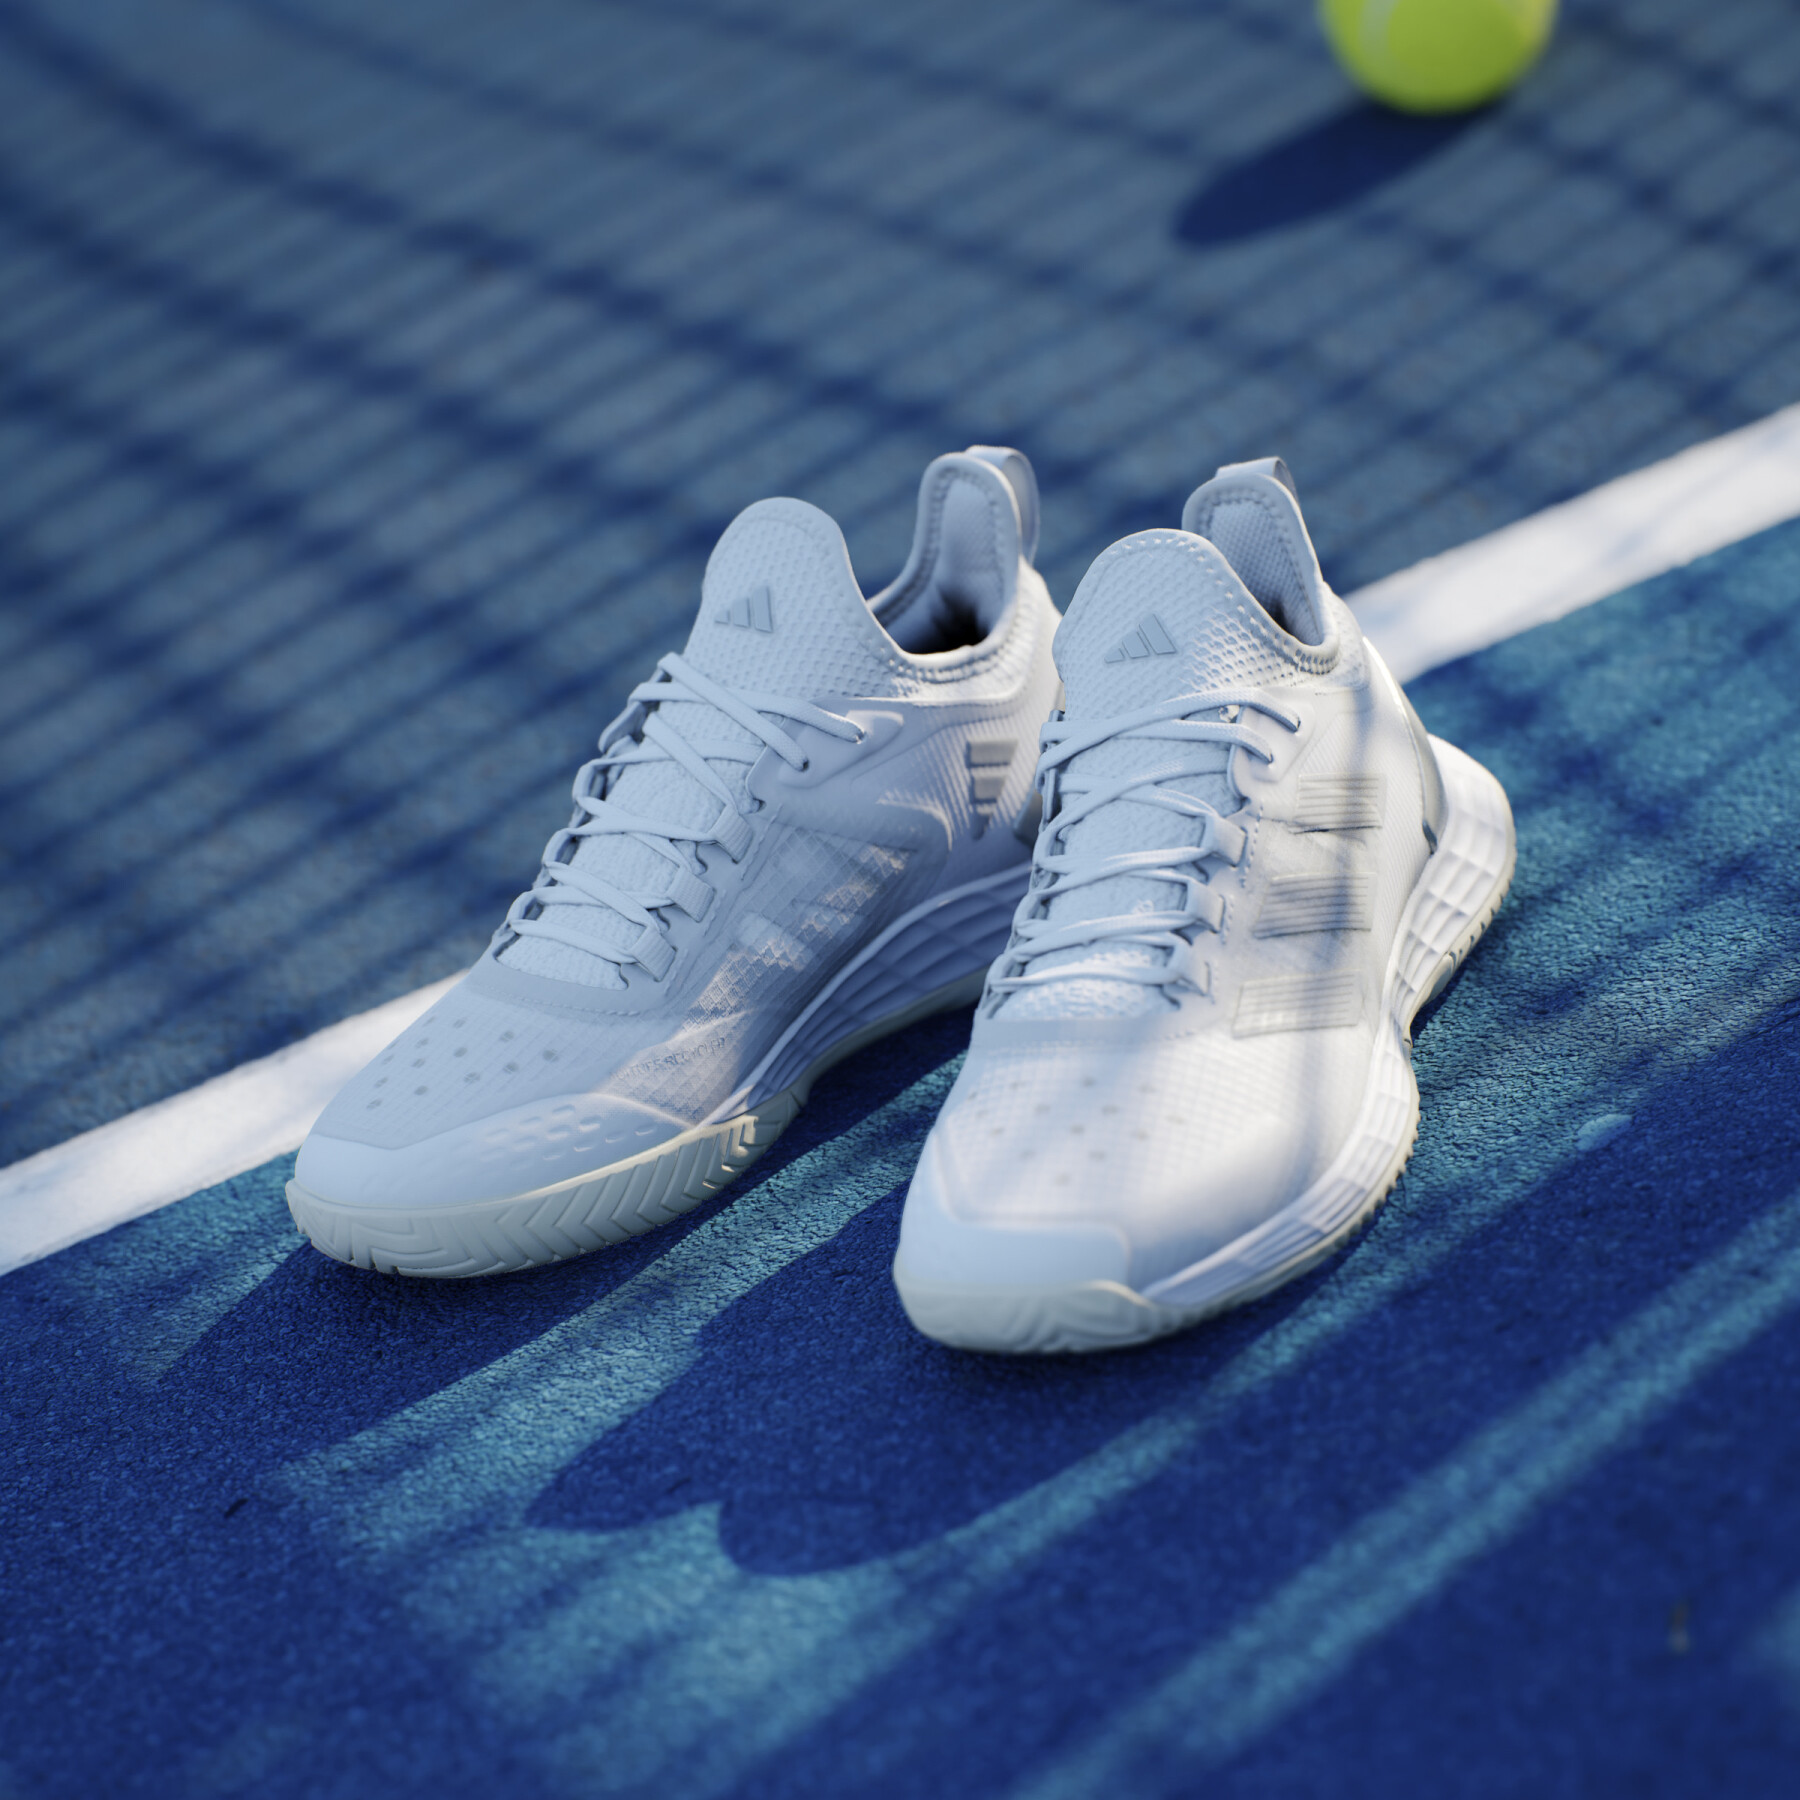 Women's tennis shoes adidas Adizero Ubersonic 4.1